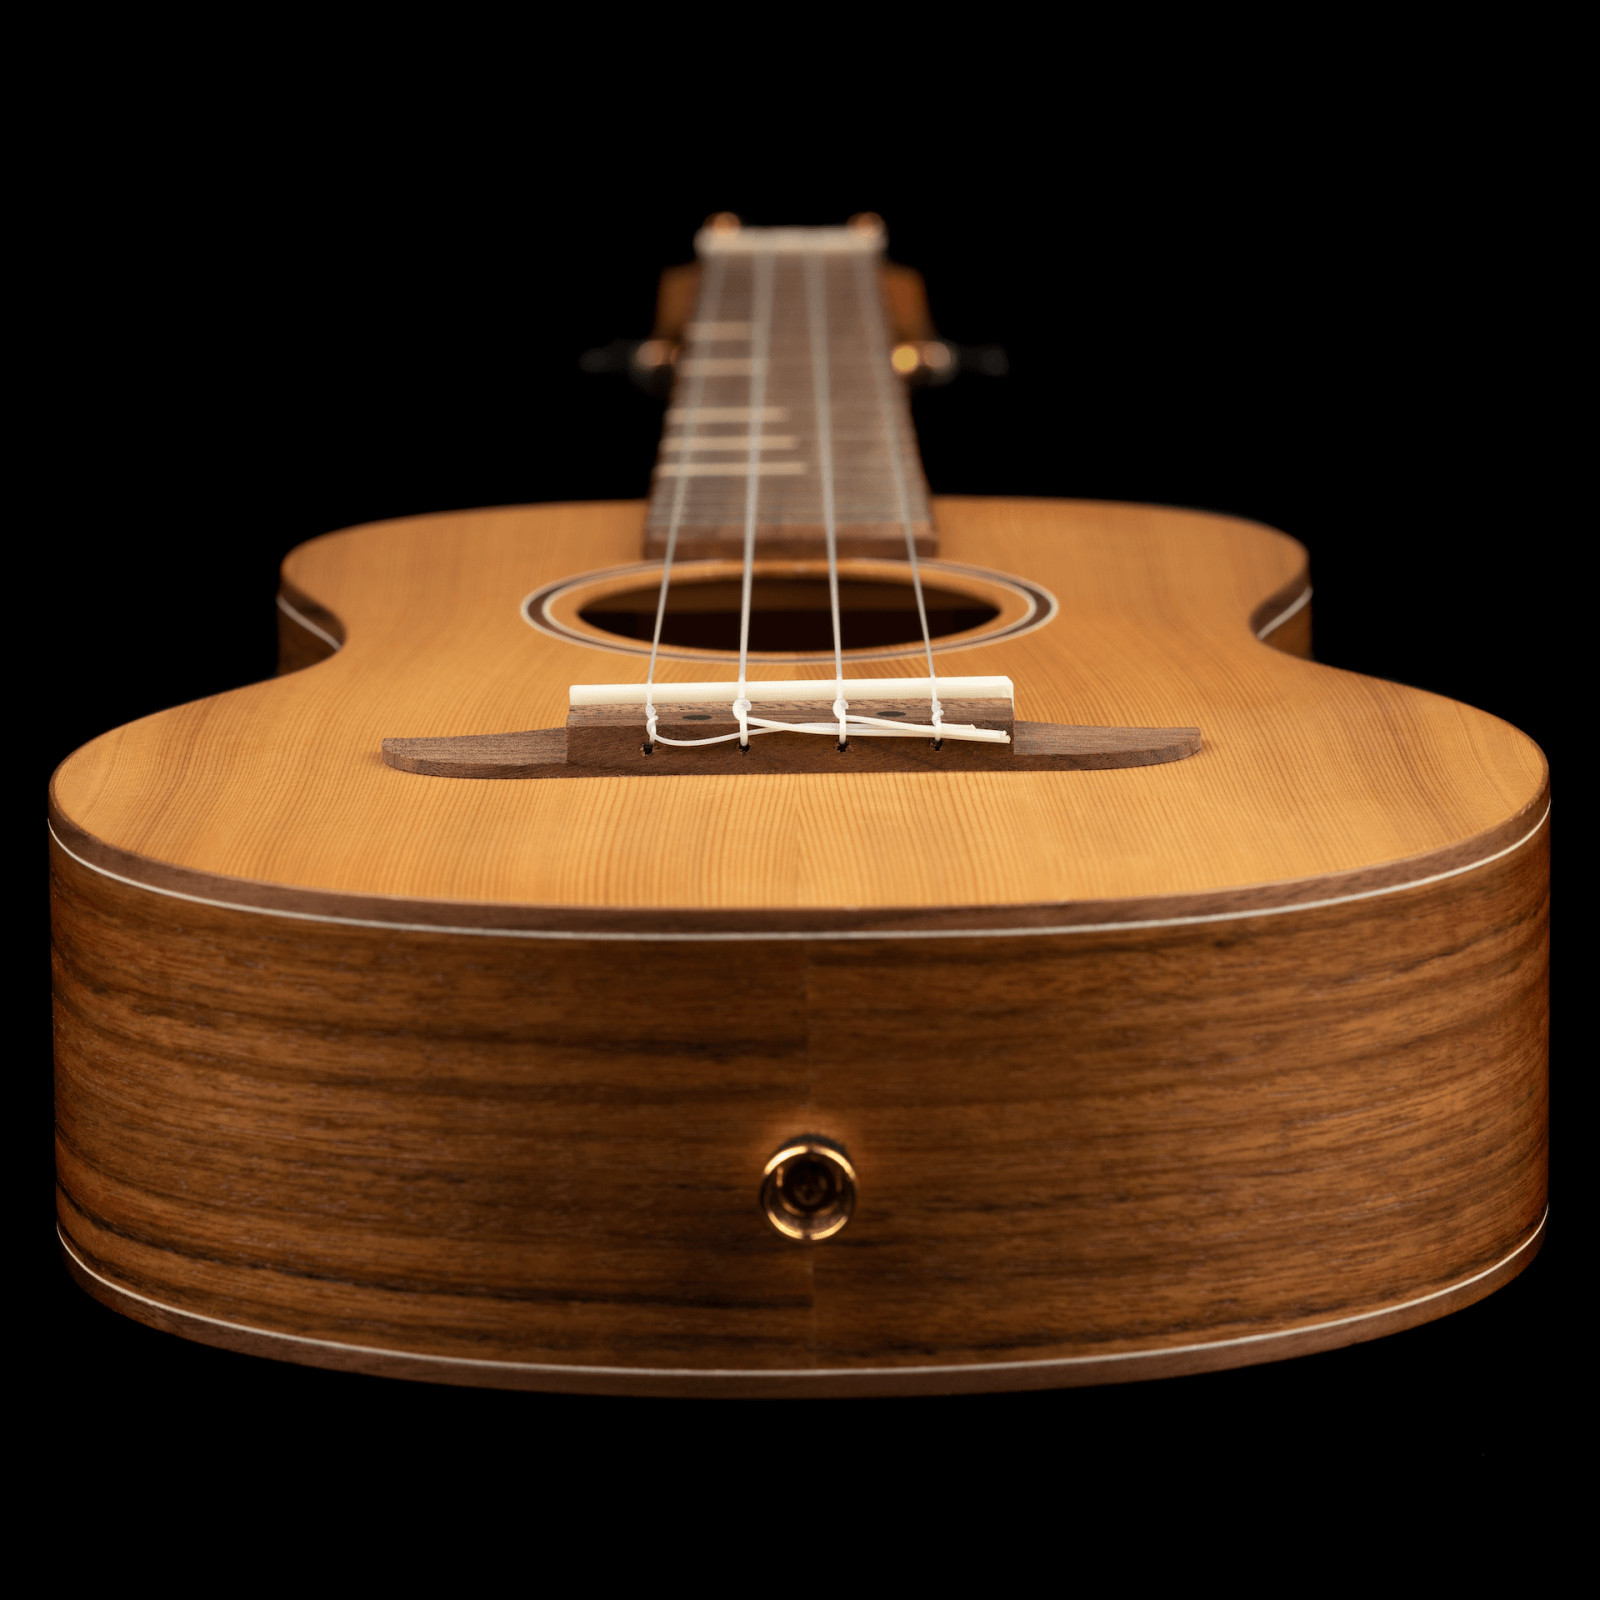 Timber Series Tenor Ukulele - Solid Natural Cedar/Walnut Acoustic with Gig Bag - Timber Series Ukukele